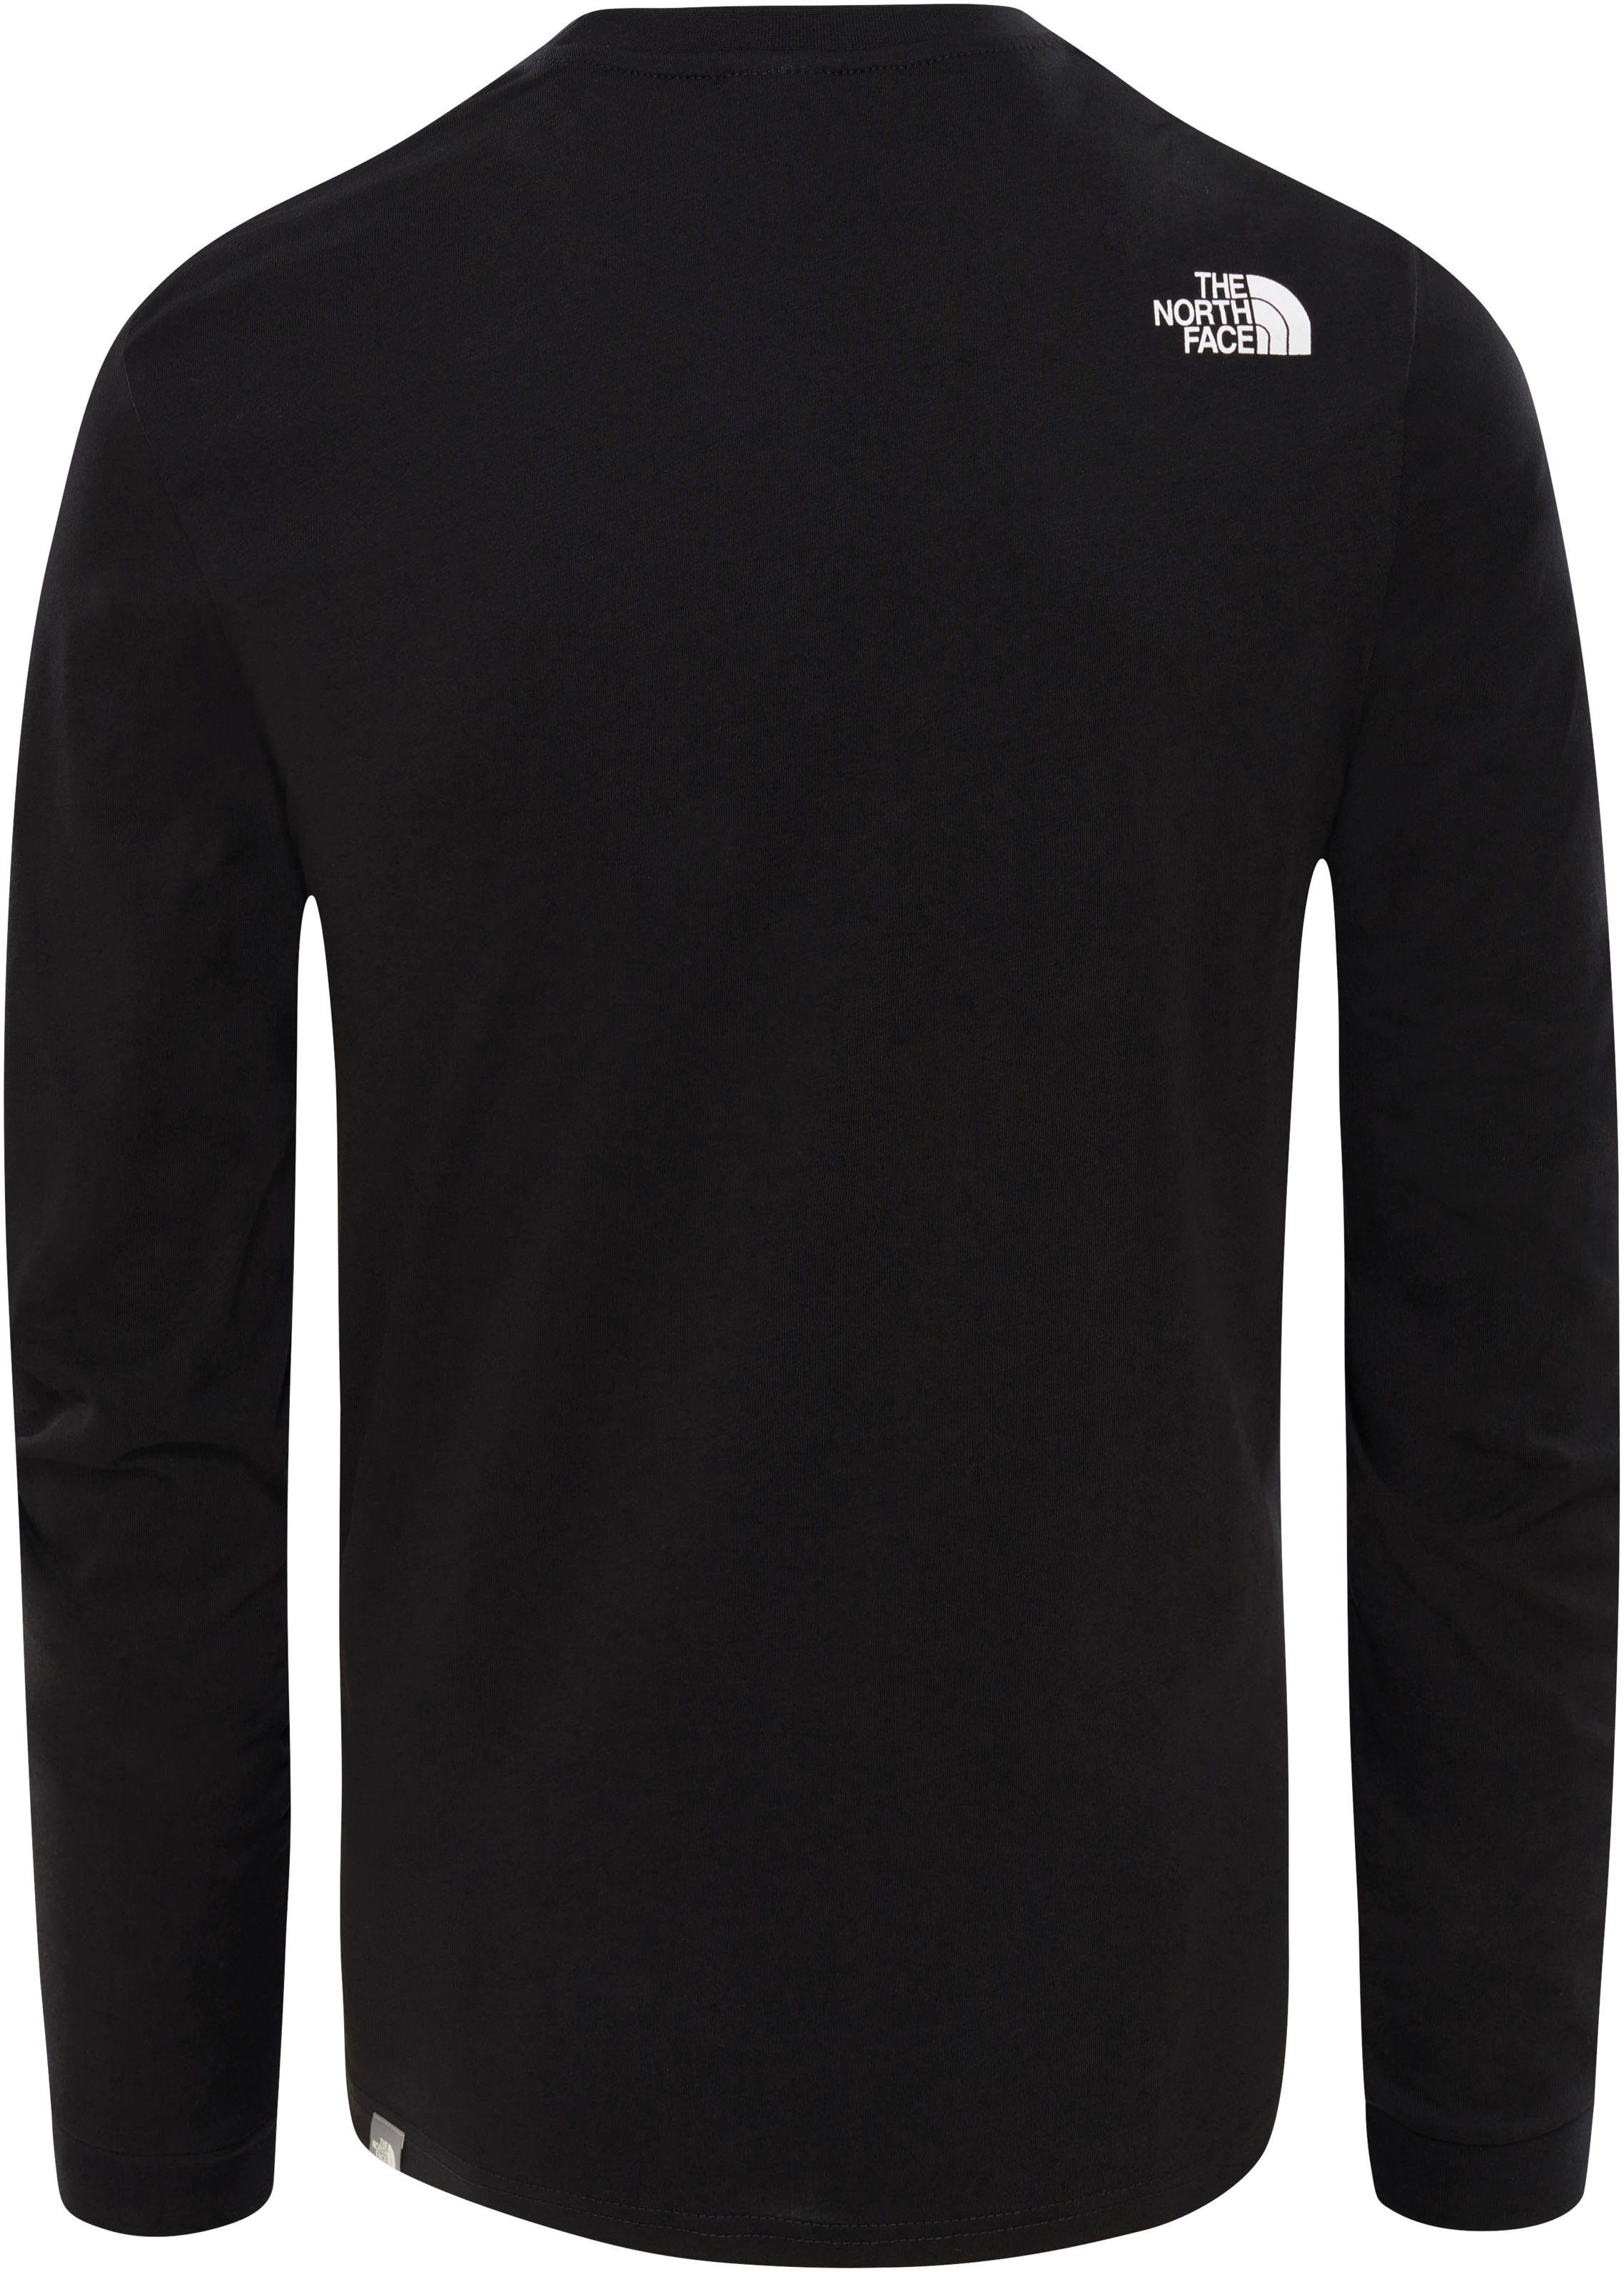 The North Face L/S Langarmshirt schwarz SIMPLE Logoschriftzug TEE DOME mit